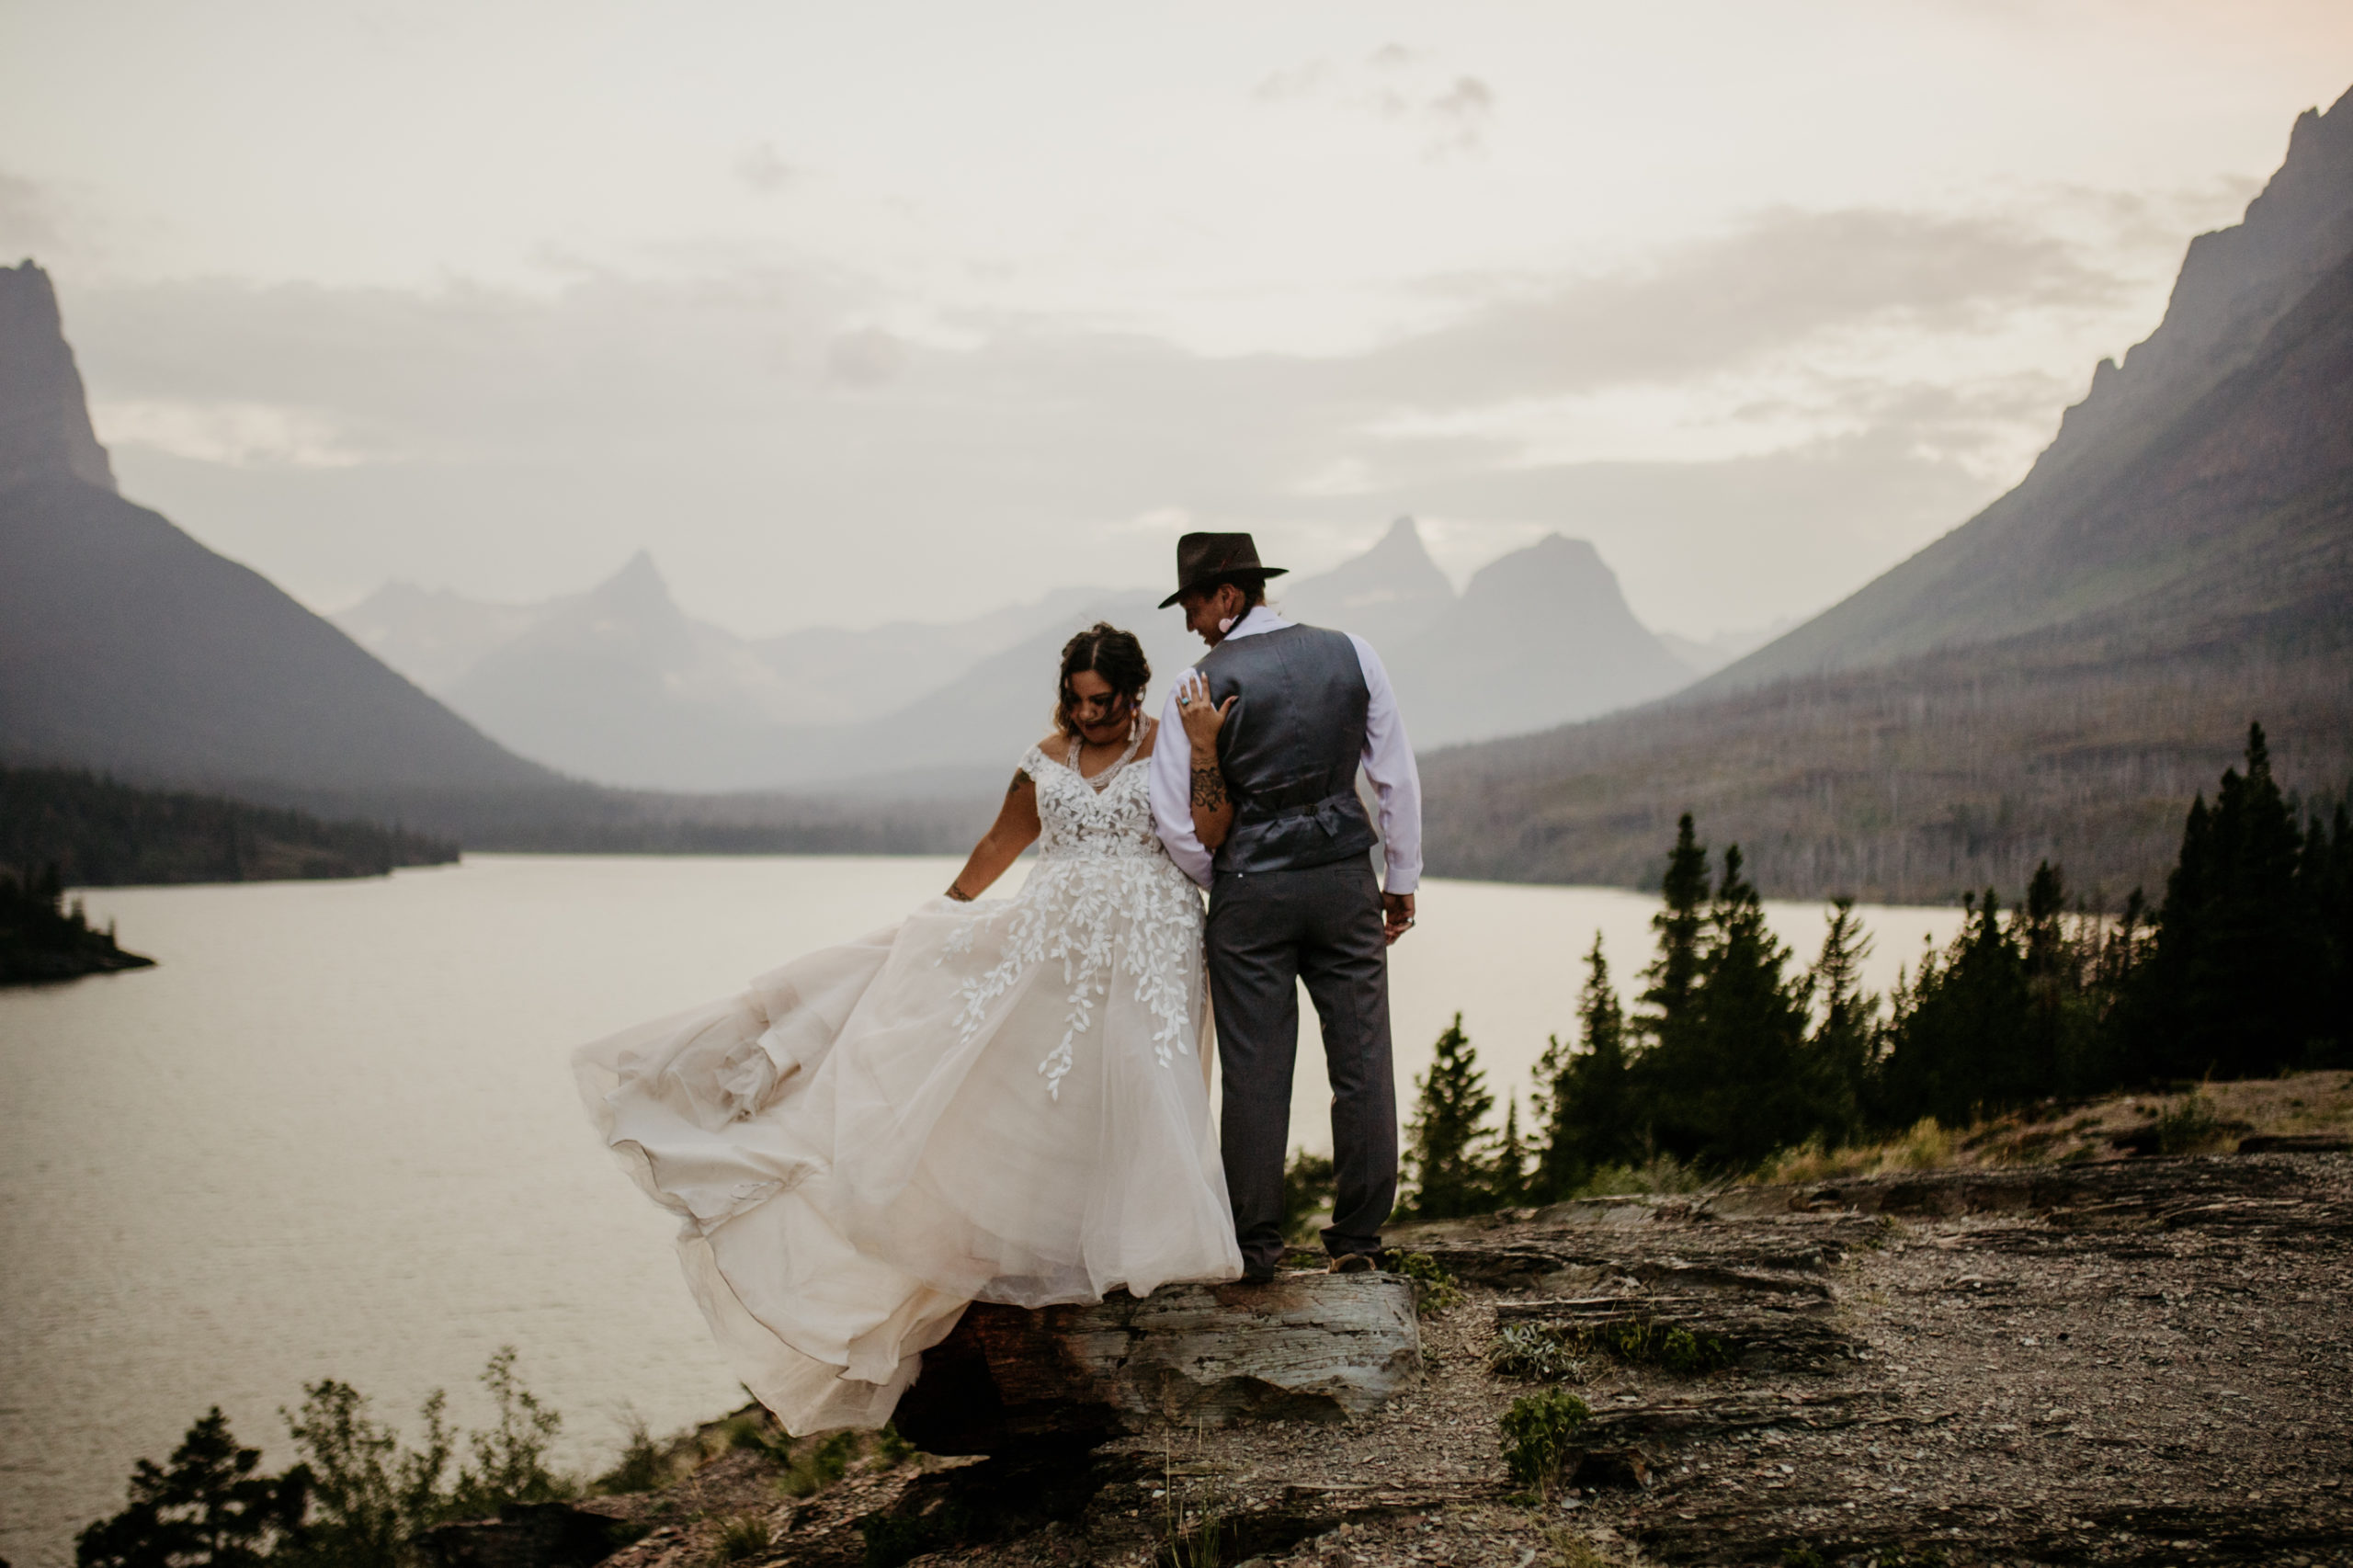 worldwide elopement locations, Glacier National Park mountain elopement